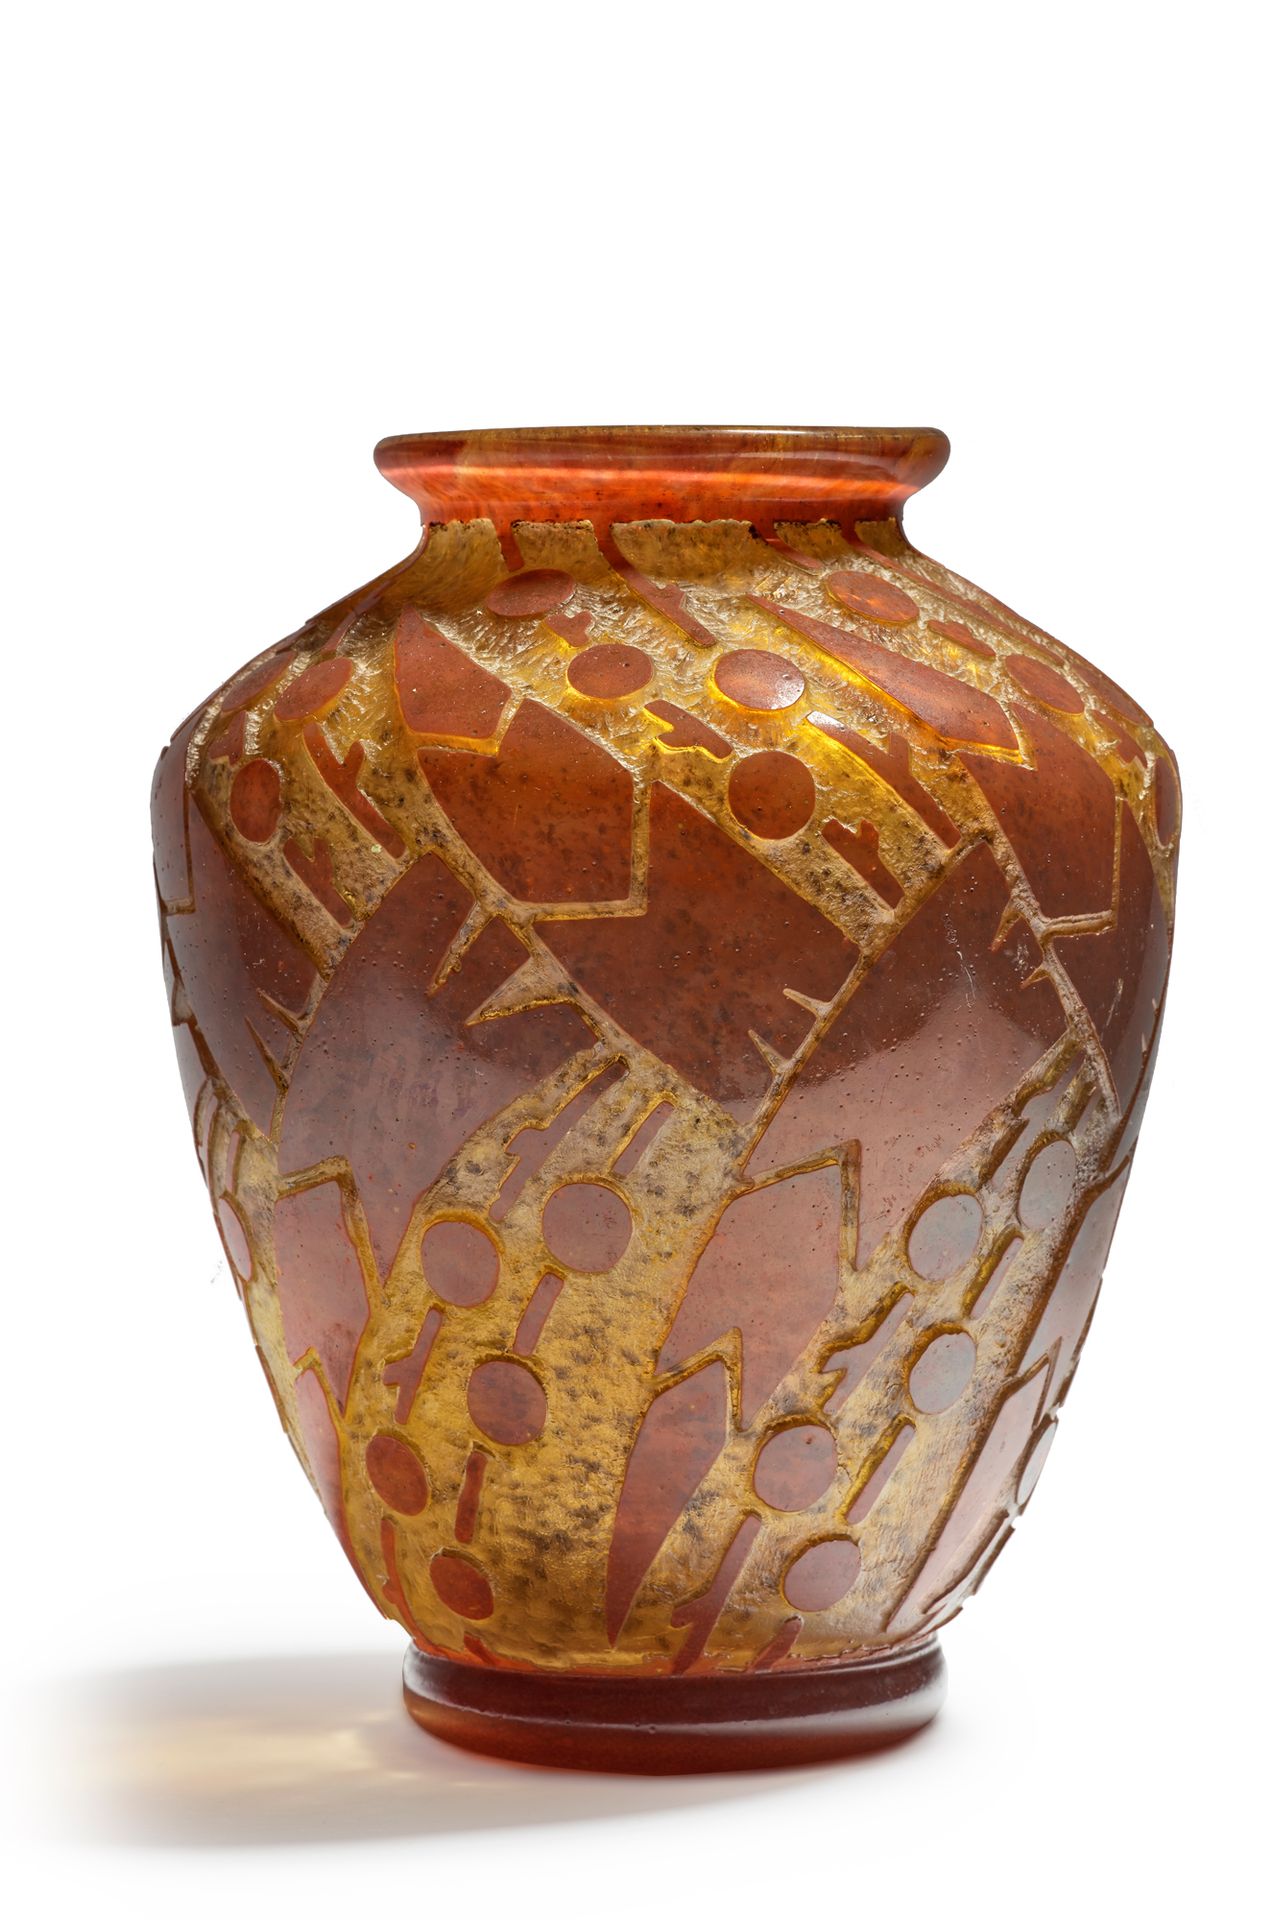 DAUM NANCY FRANCE 
厚实的橙色玻璃花瓶，上面有酸蚀的叶子装饰
签名为 "Daum Nancy France"
大约1930年
高：28厘米